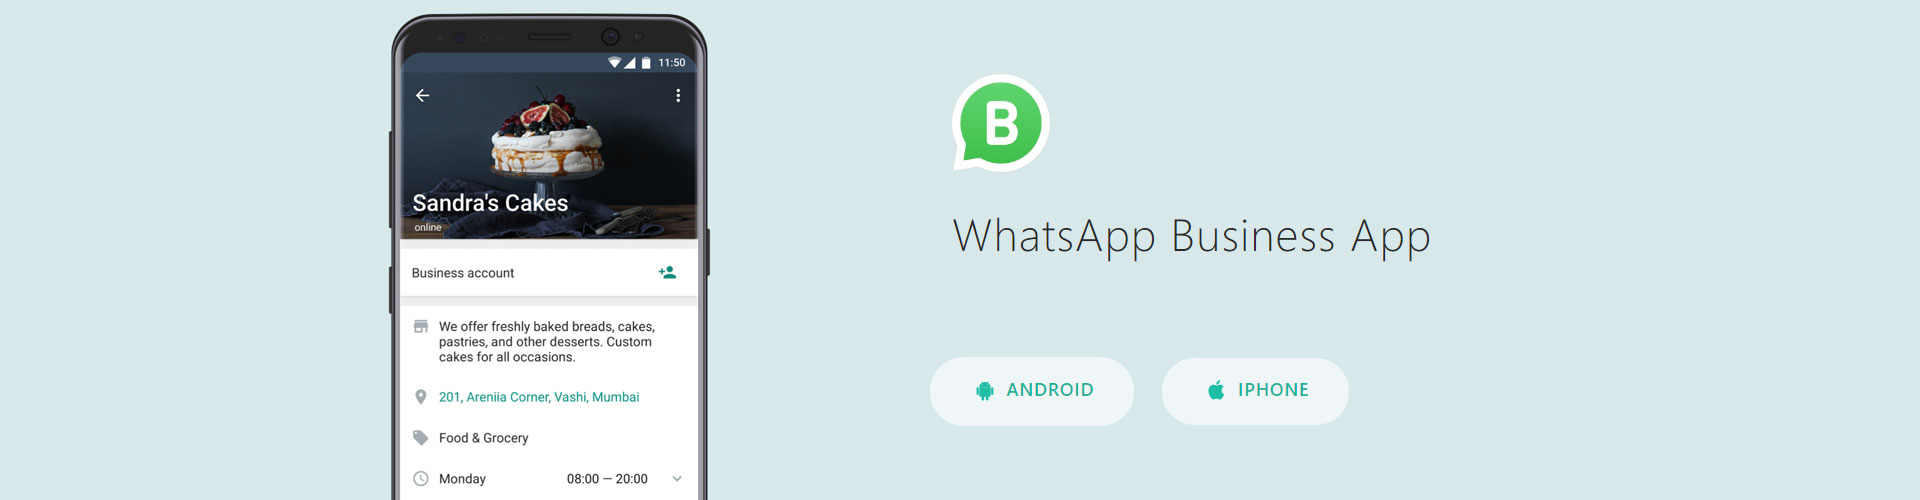 Whatsapp business app